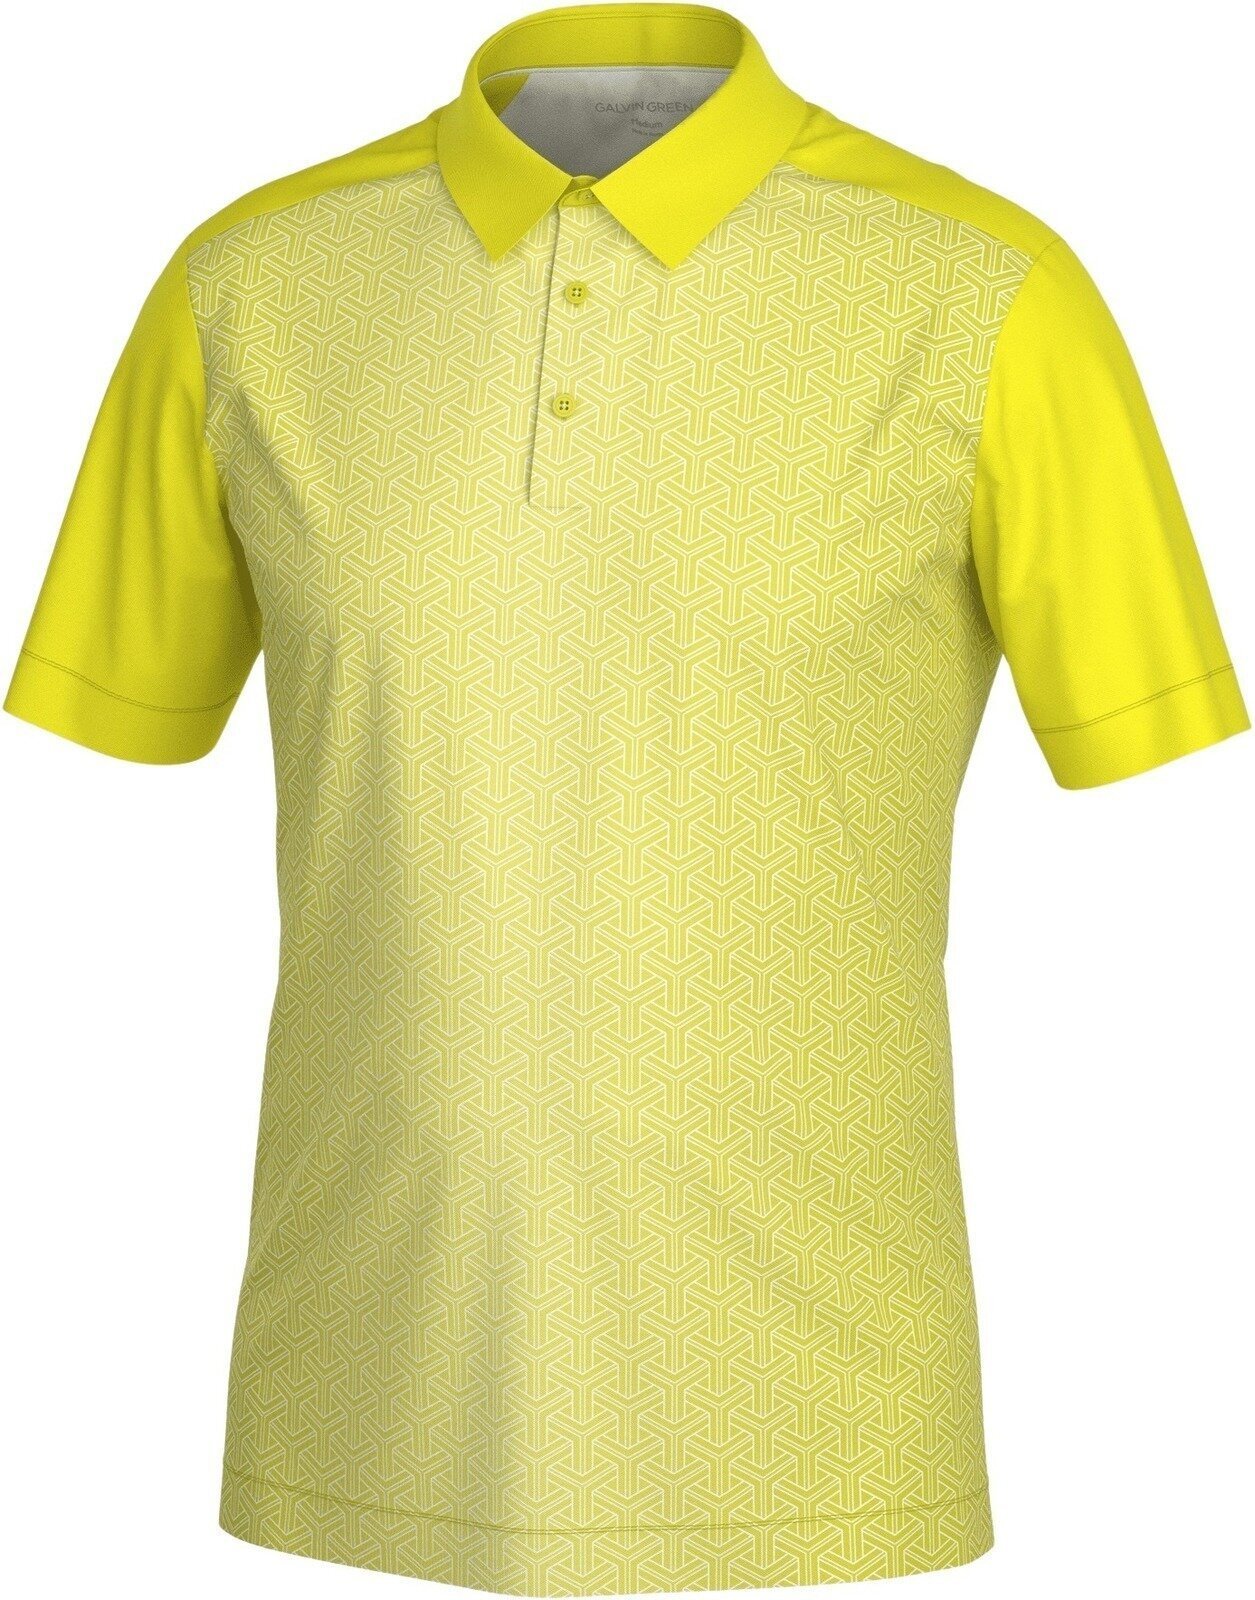 Galvin Green Mile Mens Polo Shirt